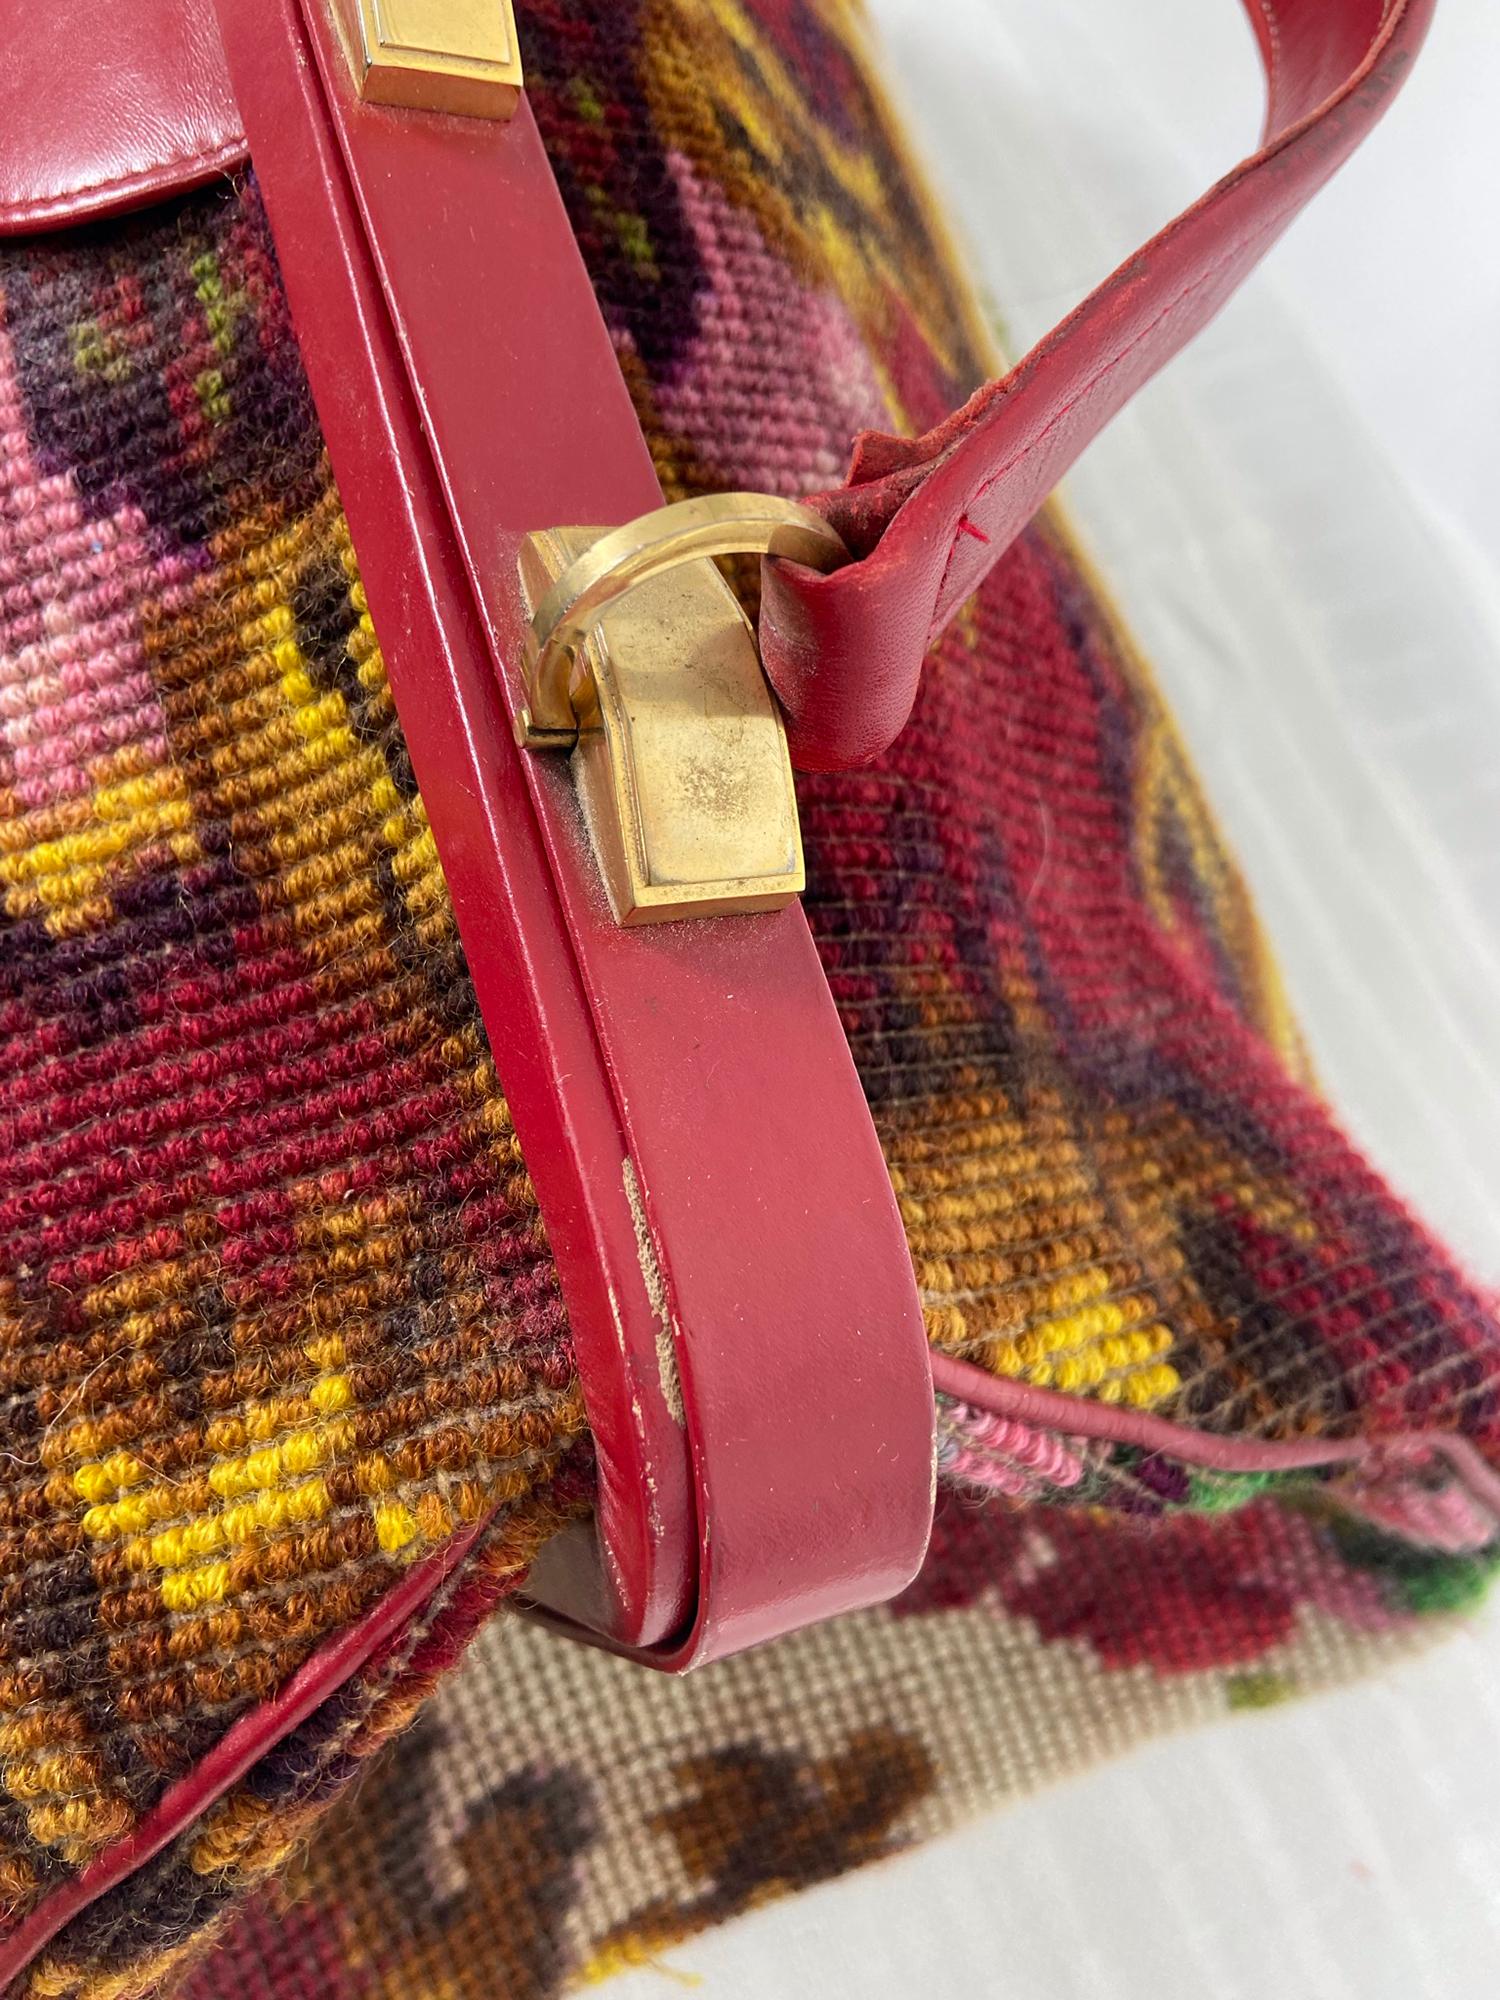 Women's Koret Roses Frame Carpet Bag Rare 1960s Leather Interior Handbag